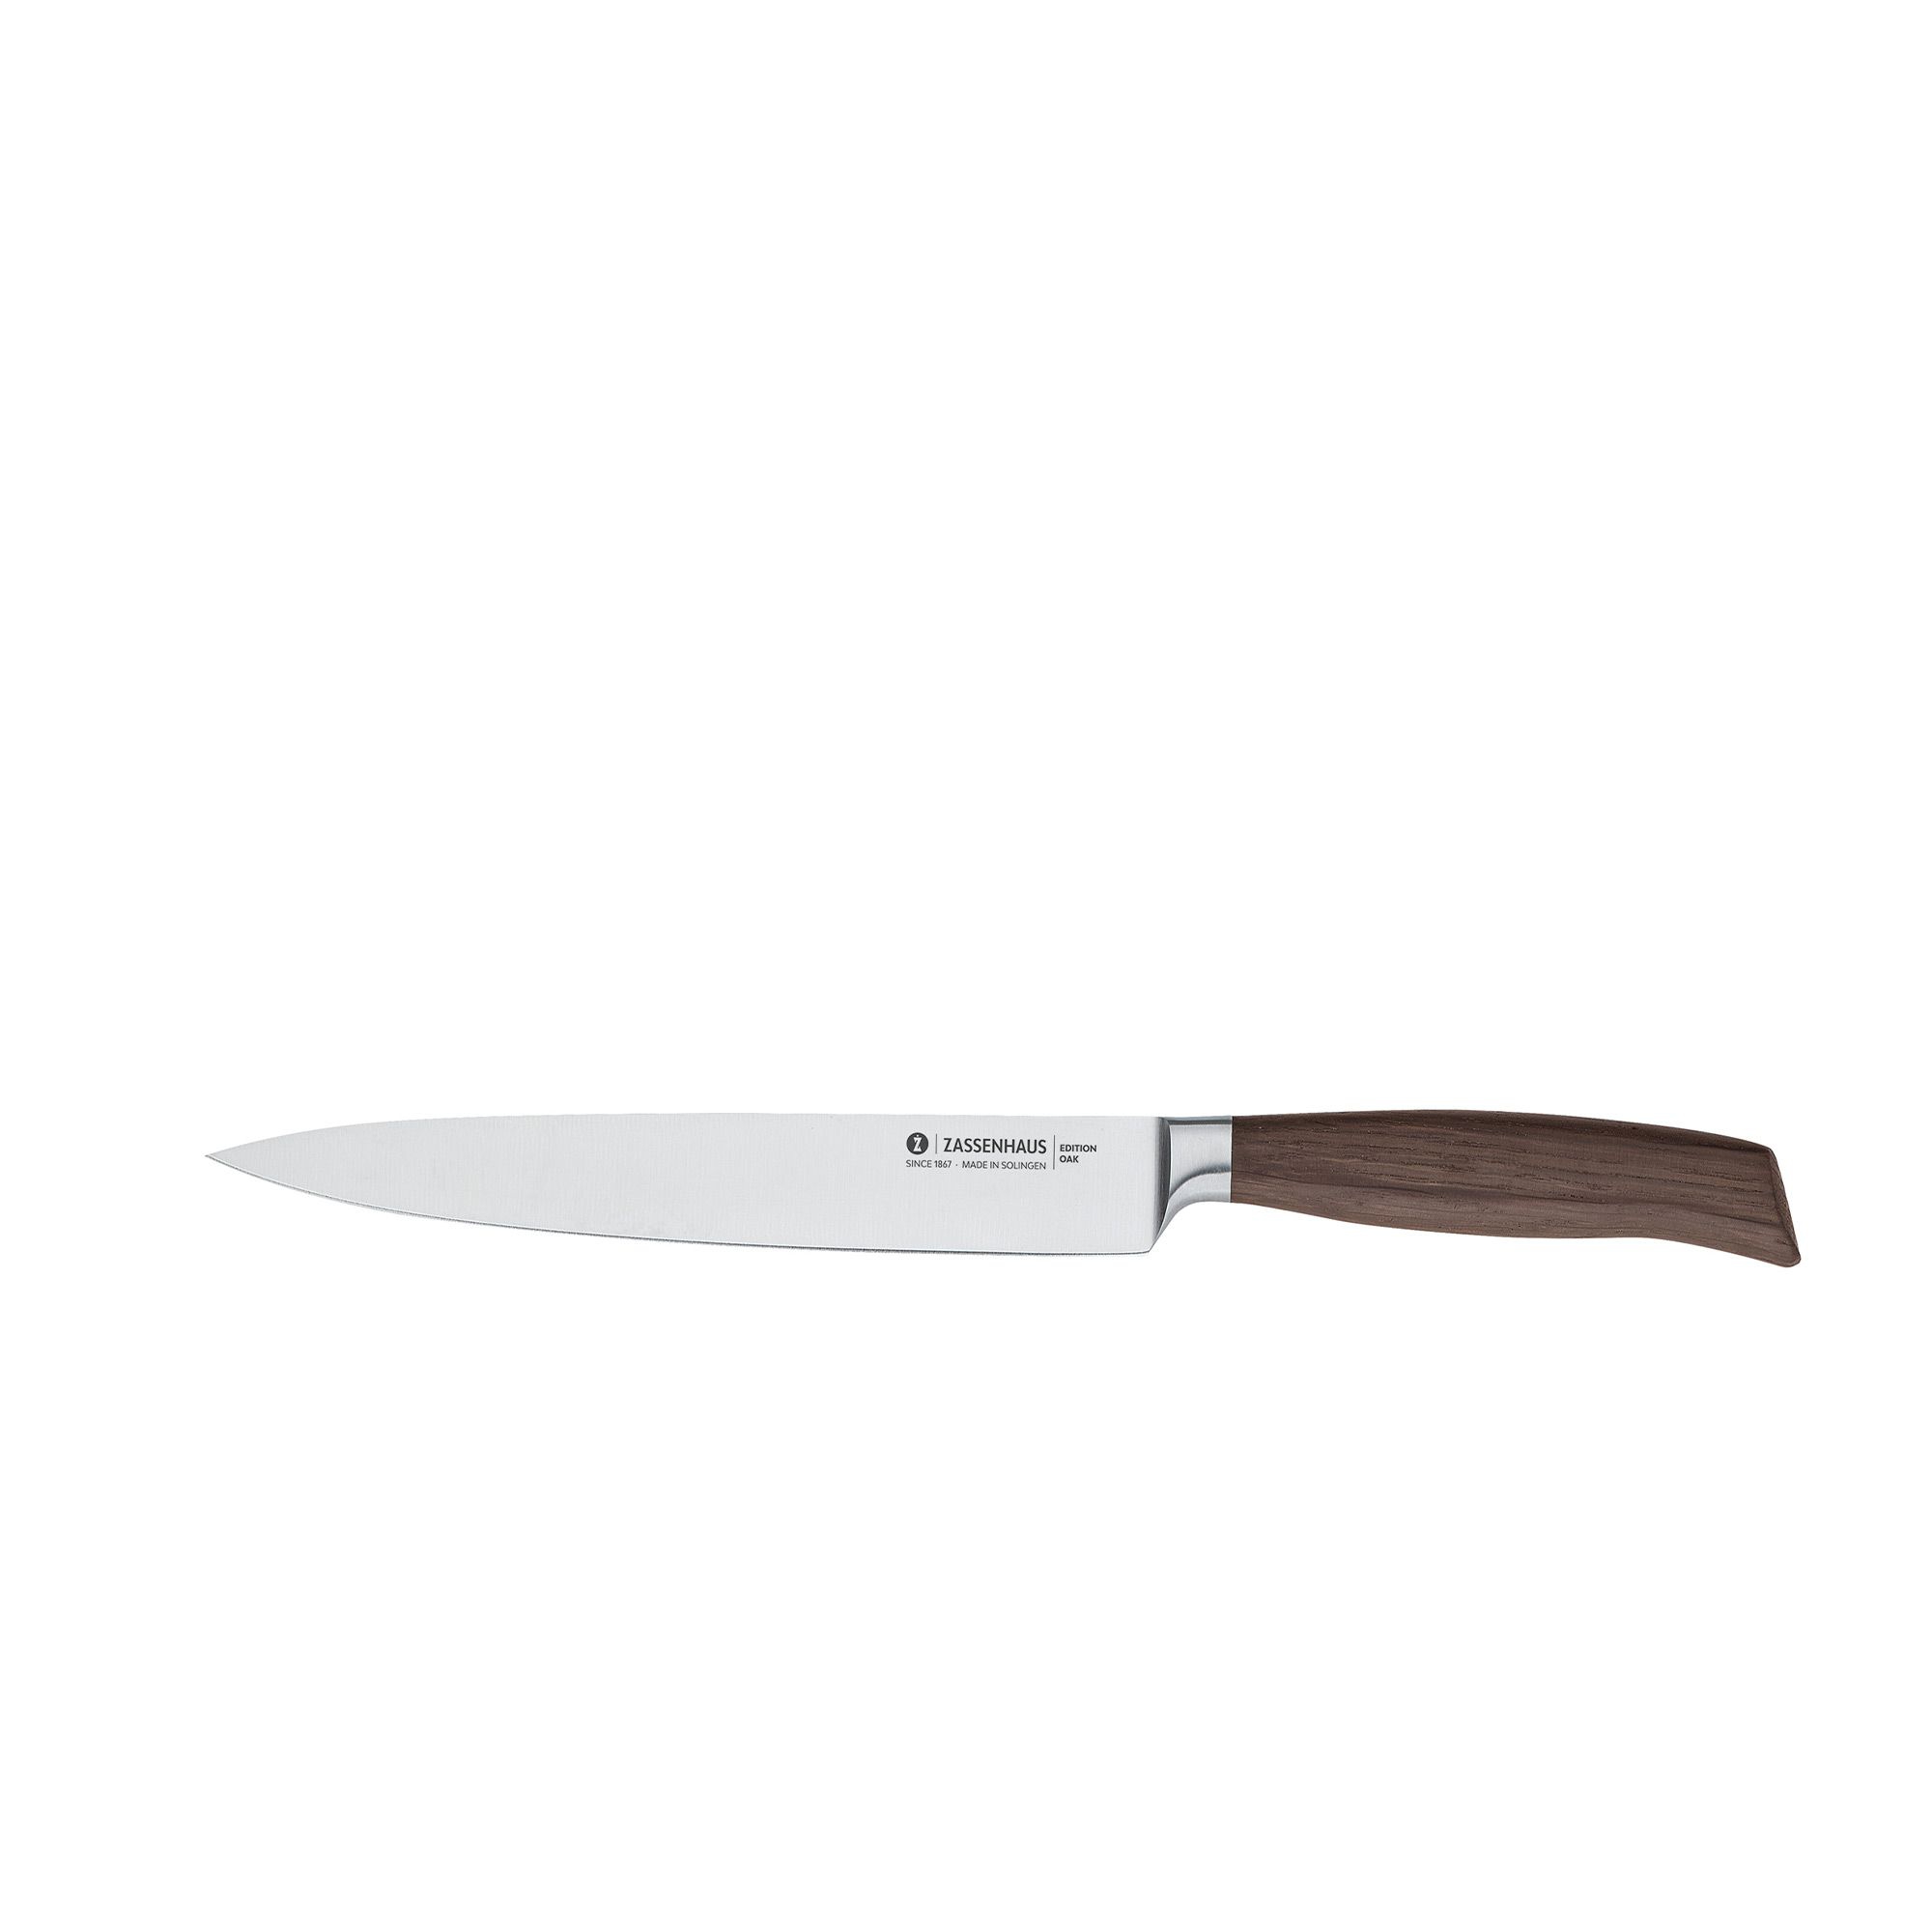 Zassenhaus - ham knife 21 cm - EDITION OAK